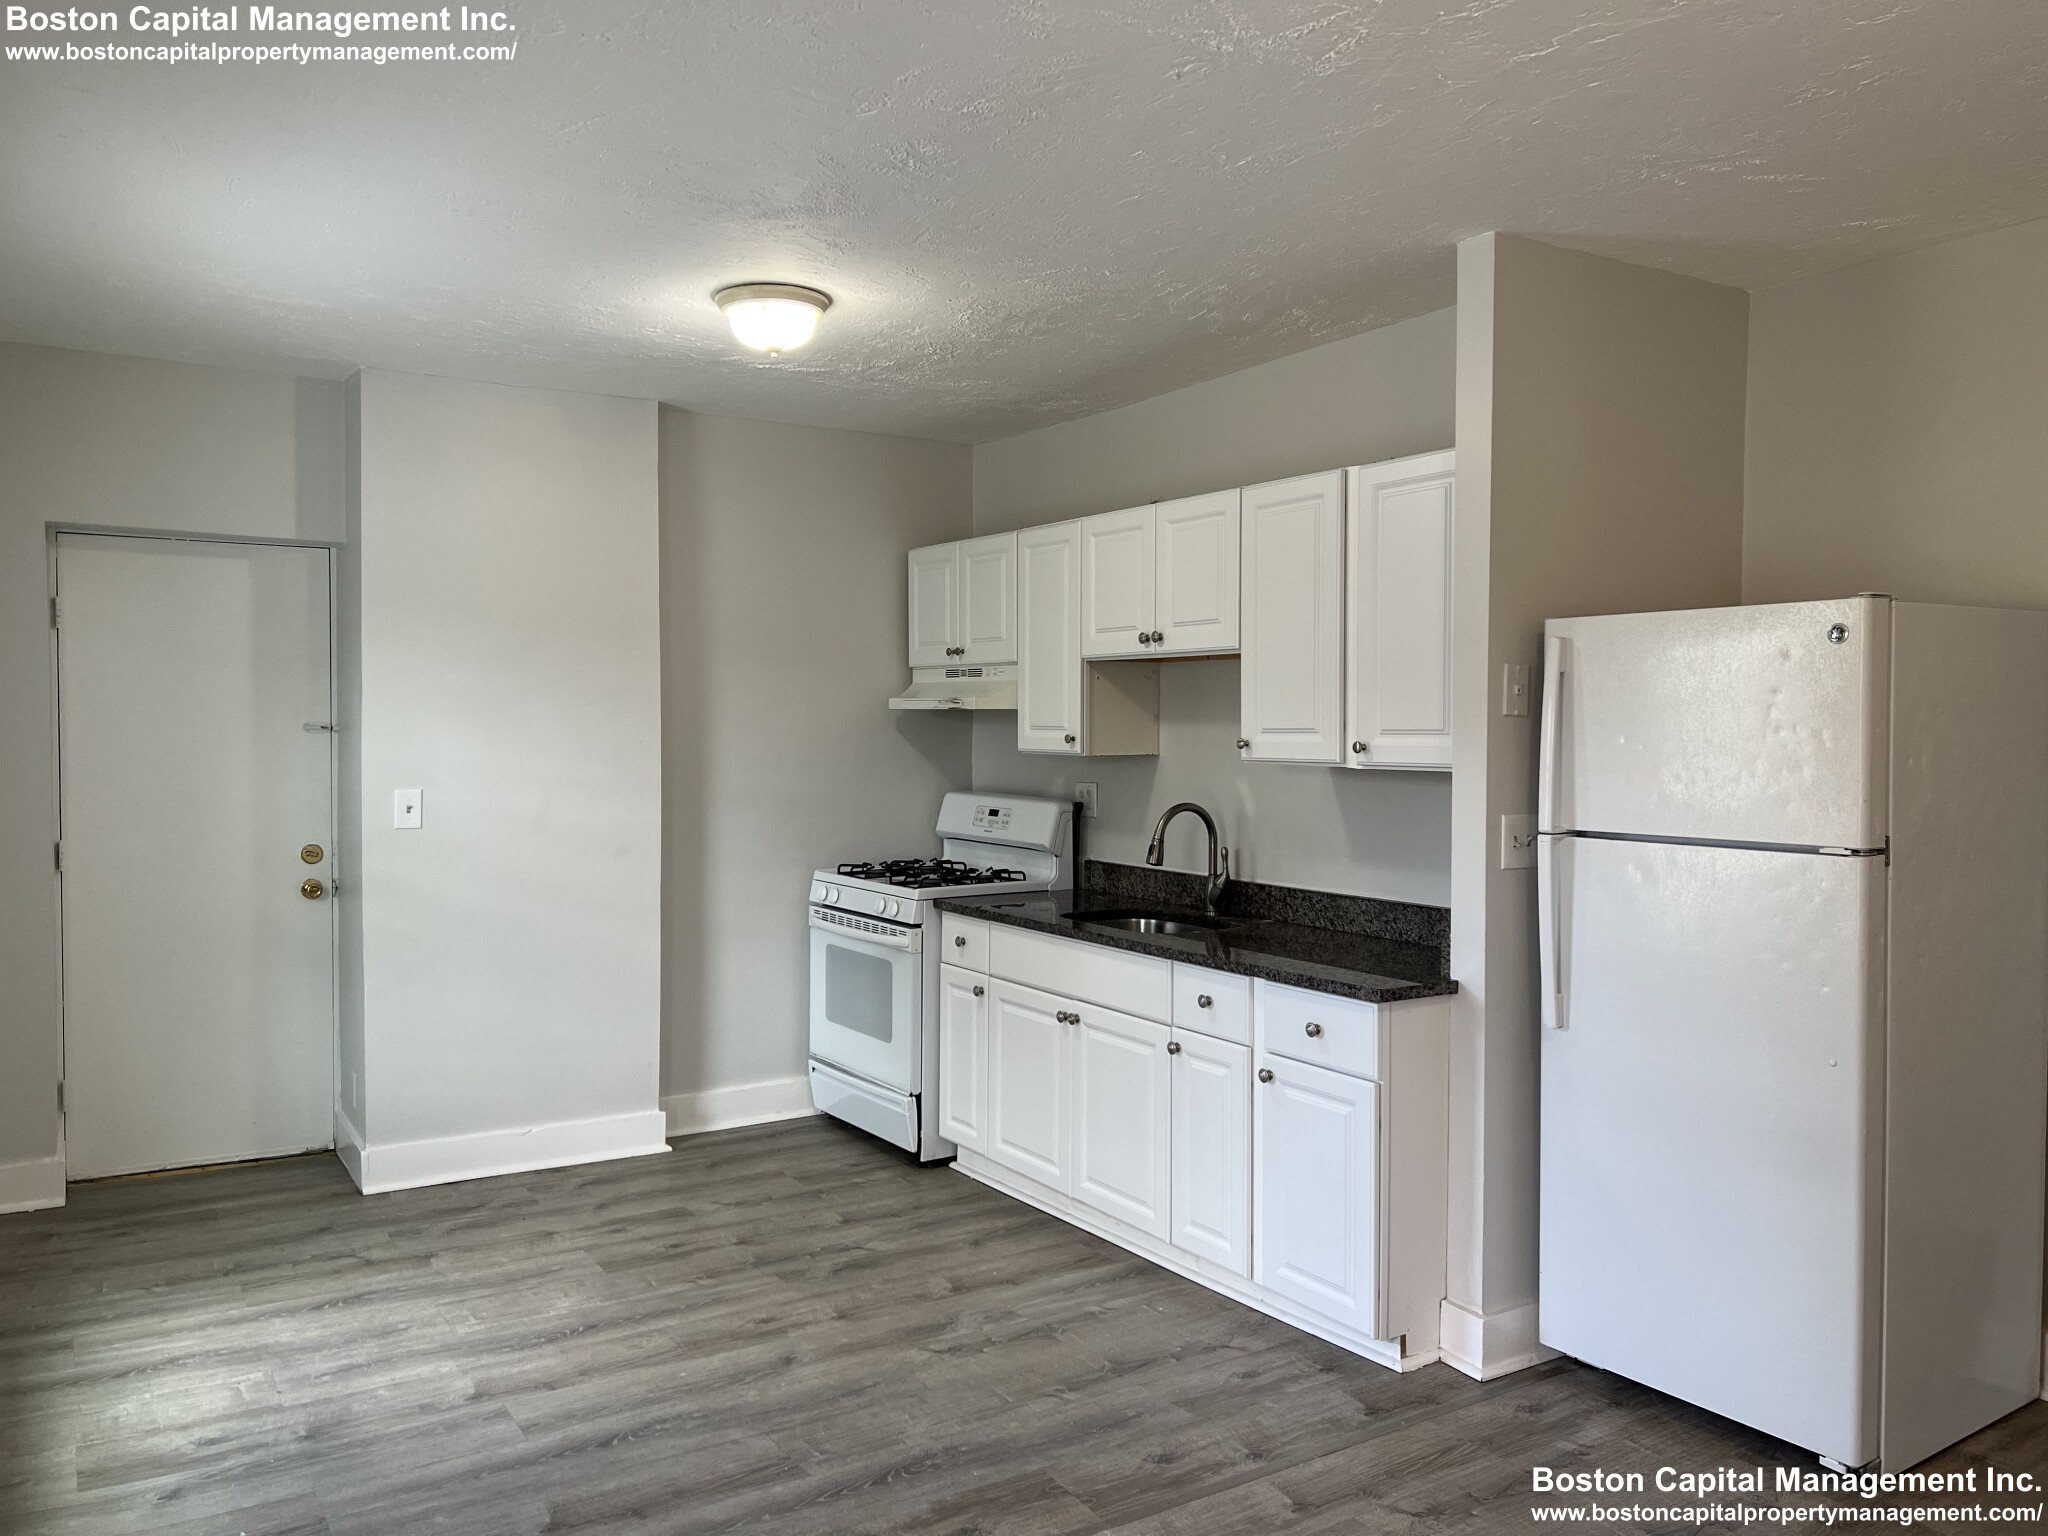 Photos of apartment on Charlton,Everett MA 02149